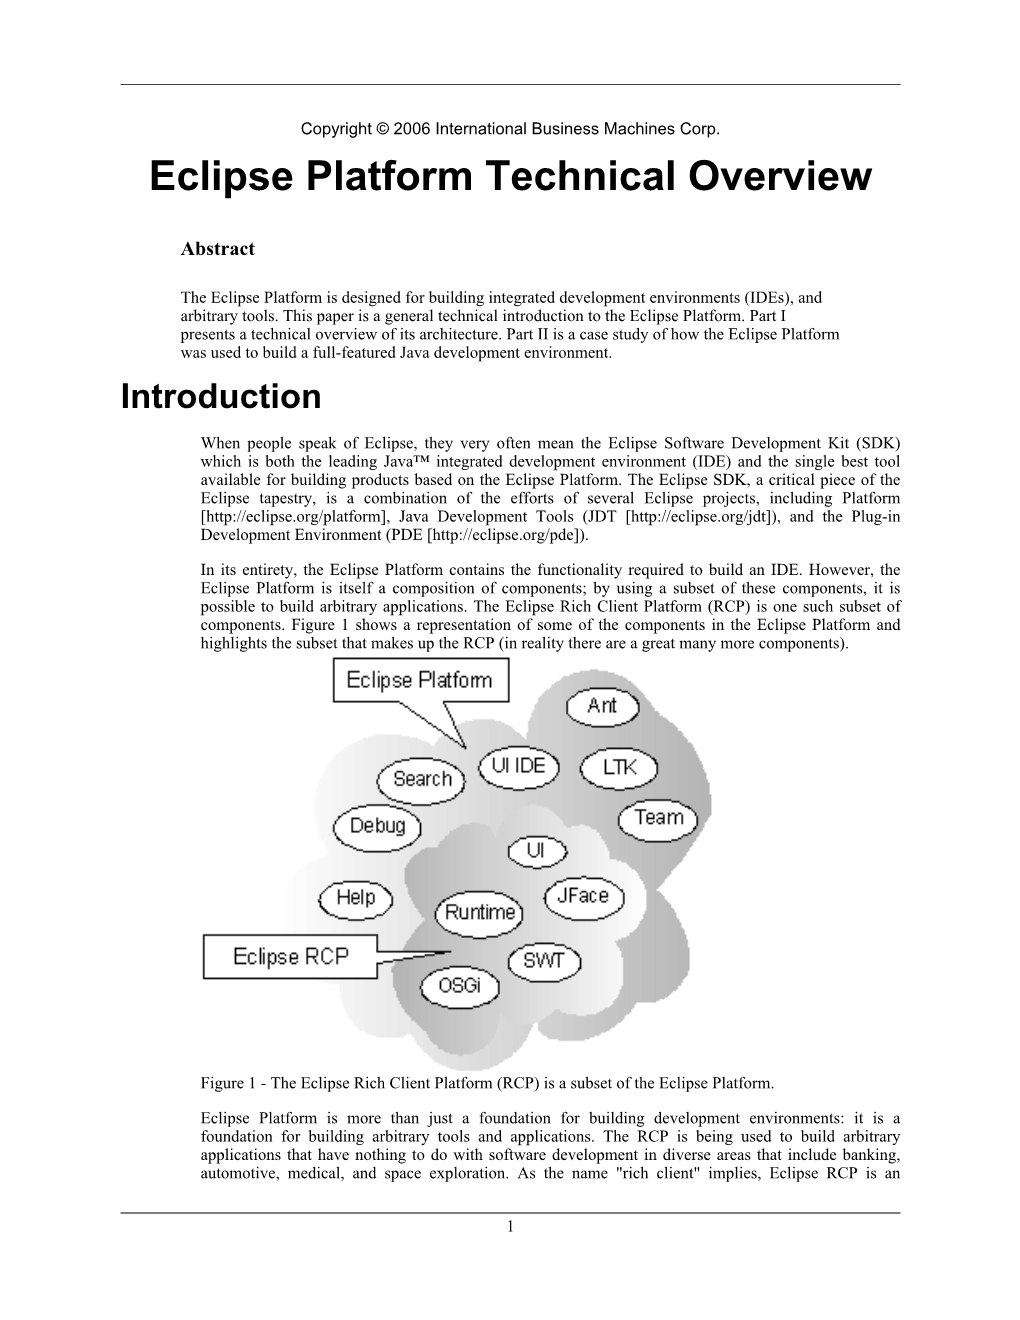 Eclipse Platform Technical Overview